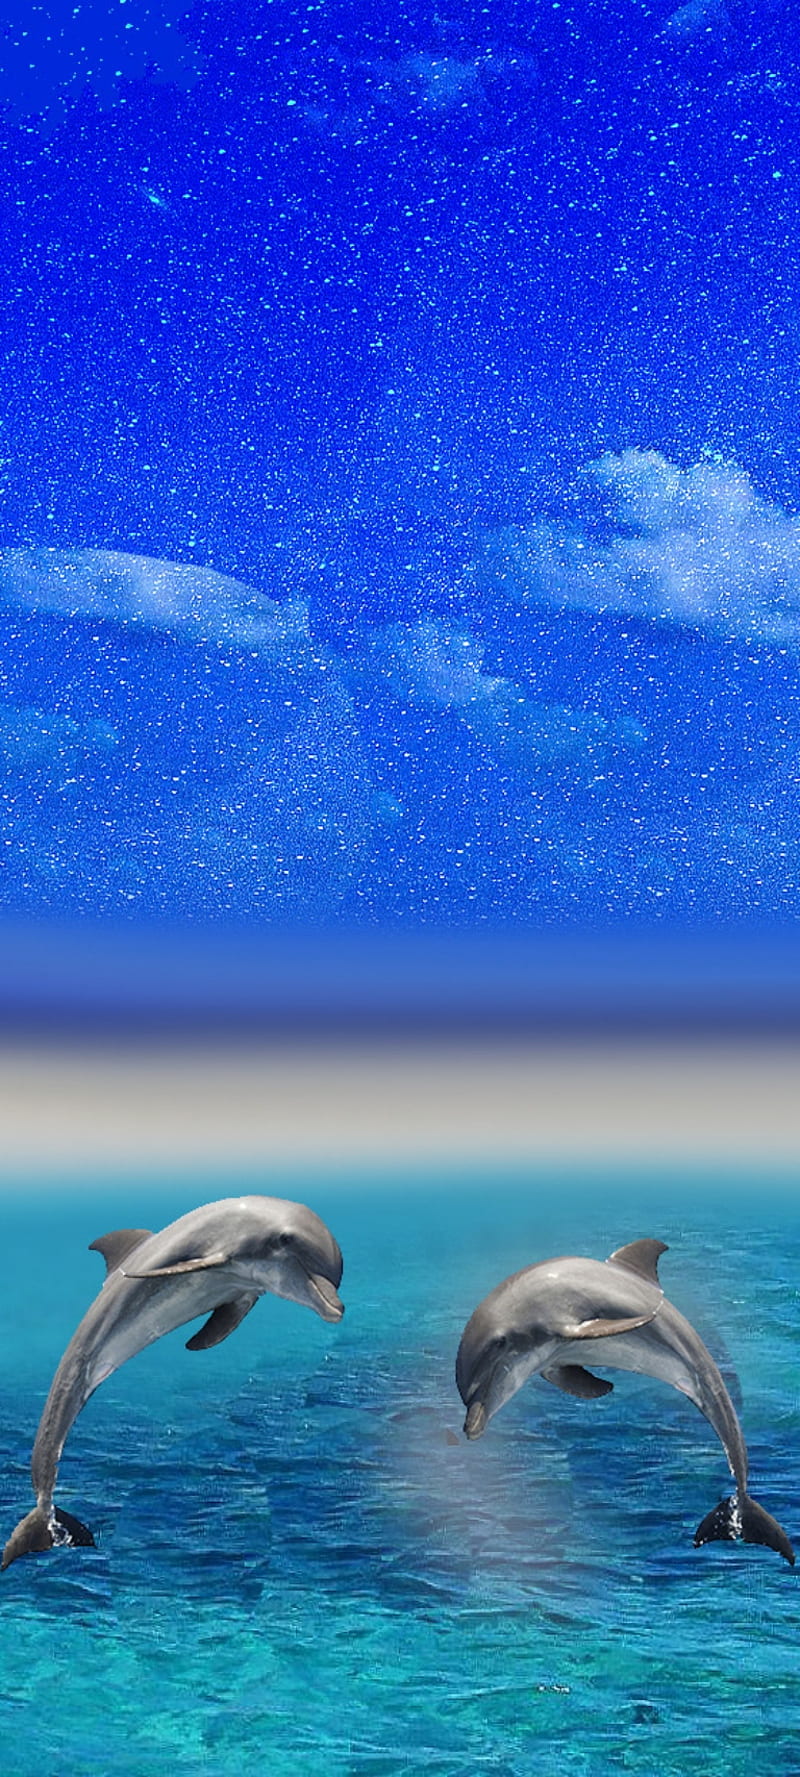 Cute Adorable Dolphin Underwater Graphic · Creative Fabrica